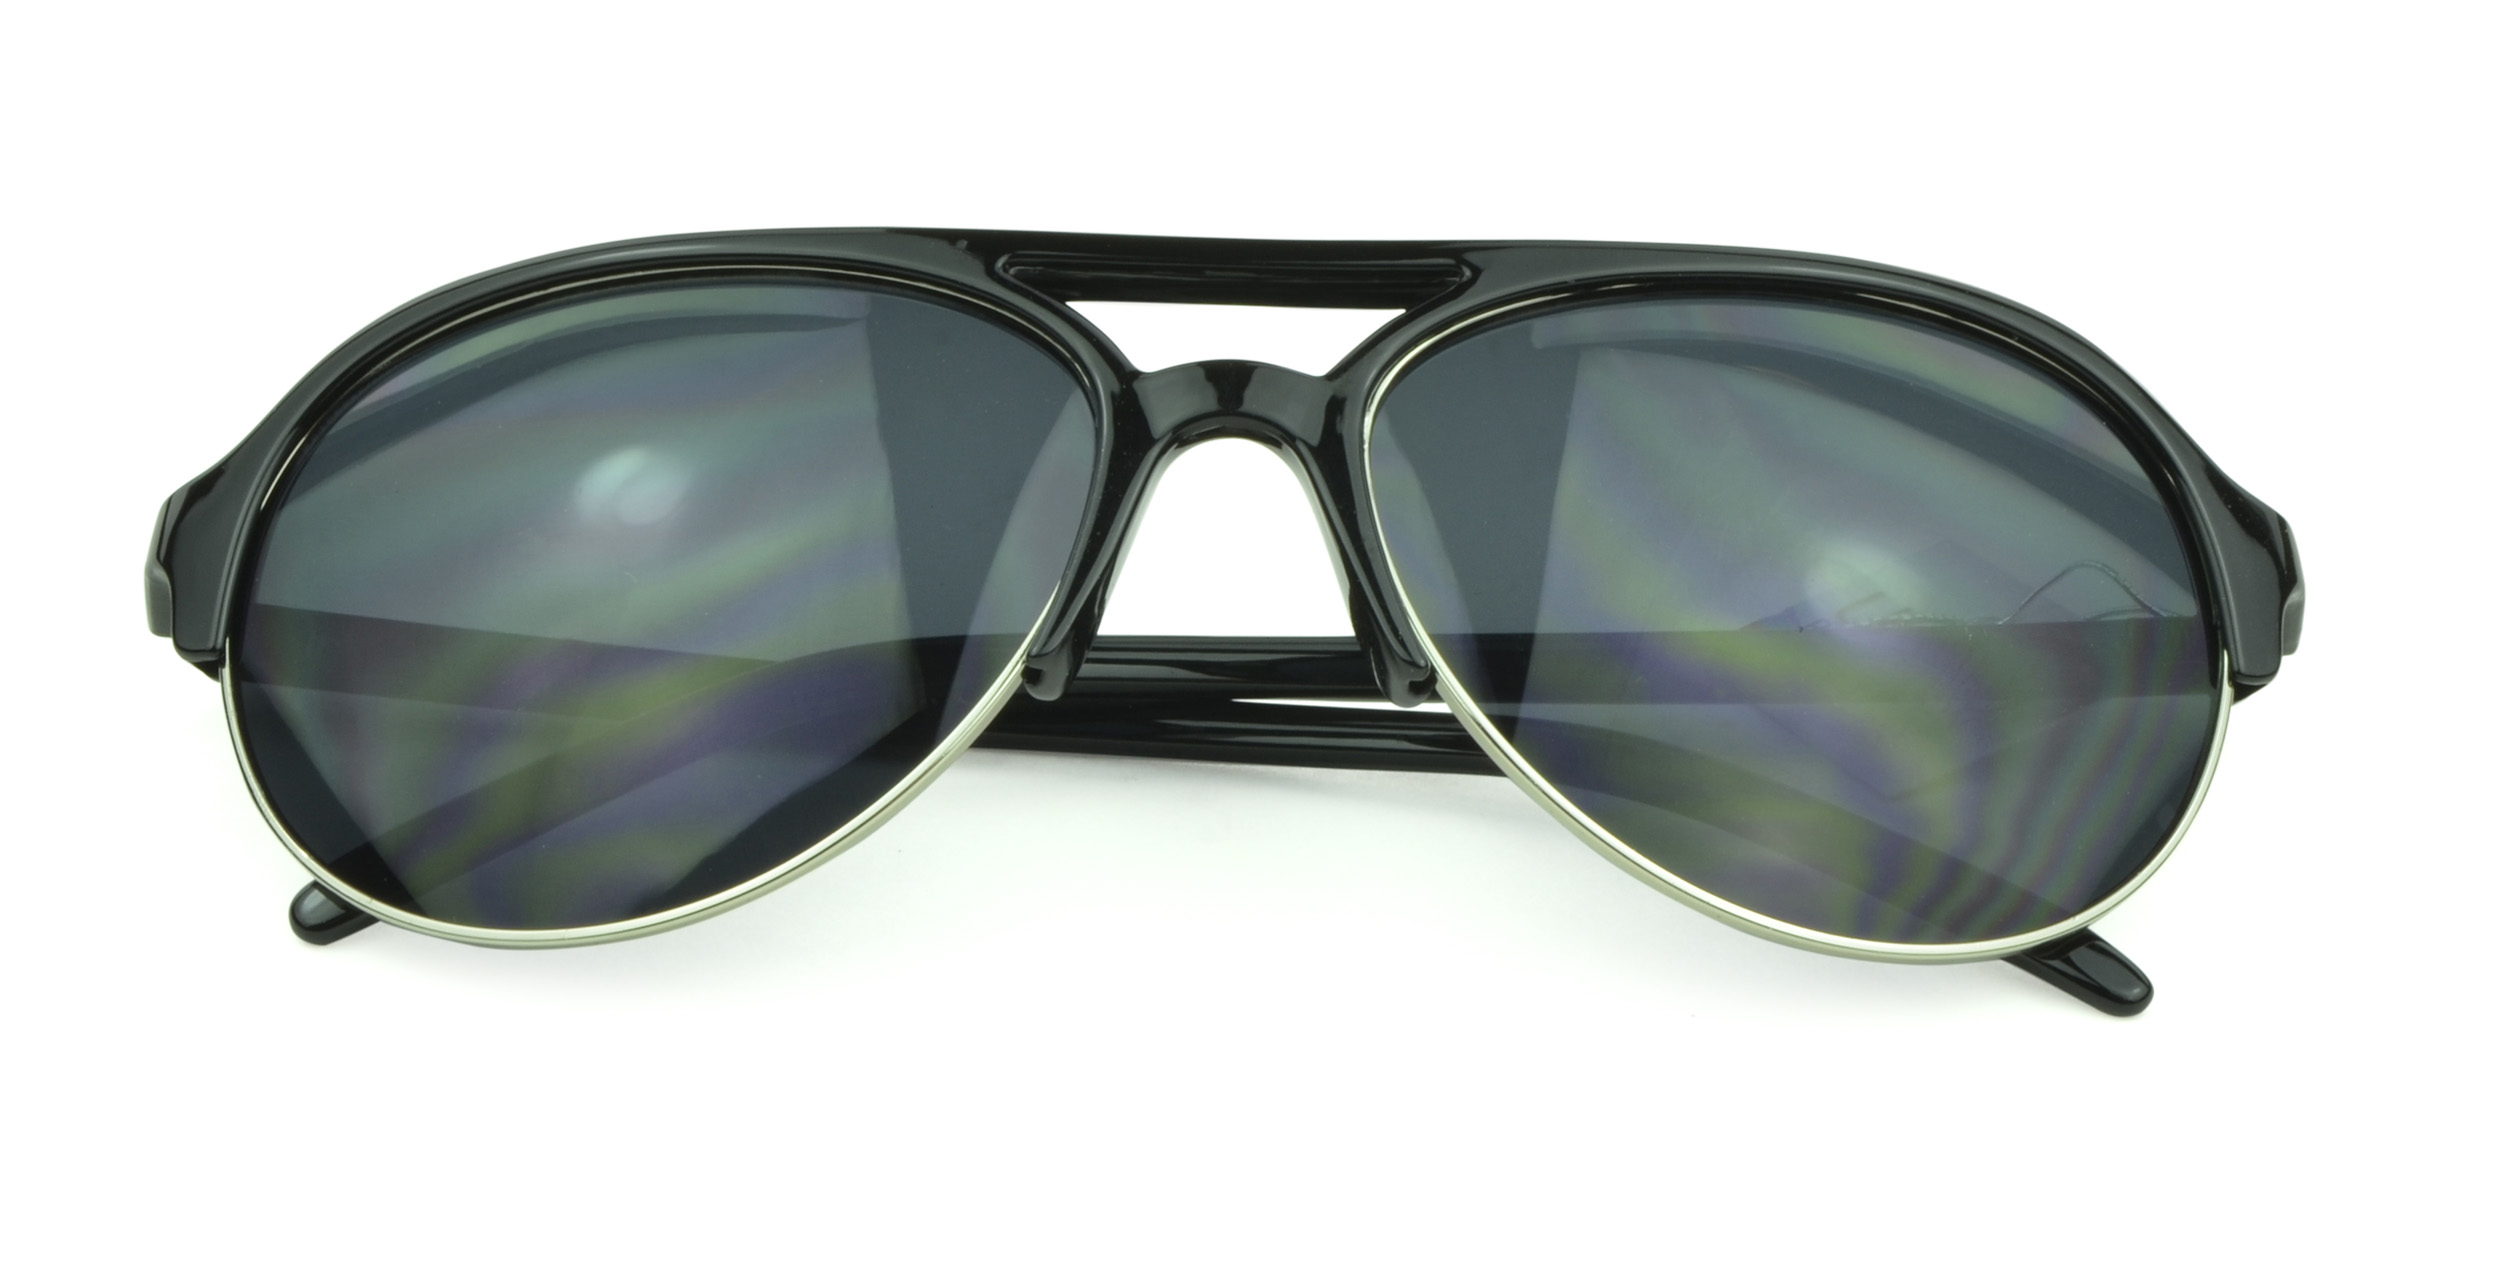 Belle Donne - Oversized Aviator Style Unisex Sunglasses- Classic Black Retro